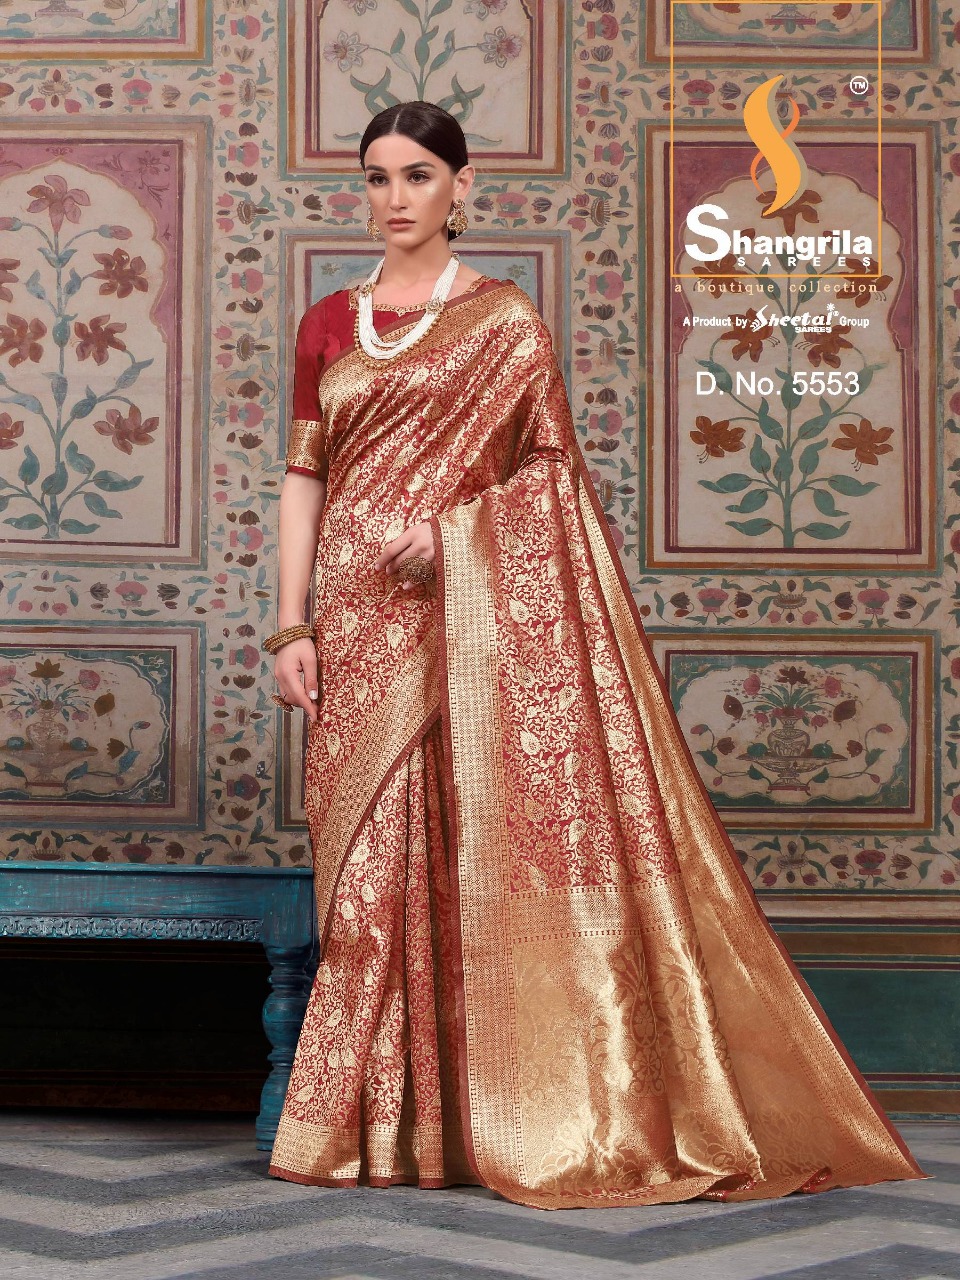 Shangrila samyra silk Traditional new silk saree catalog